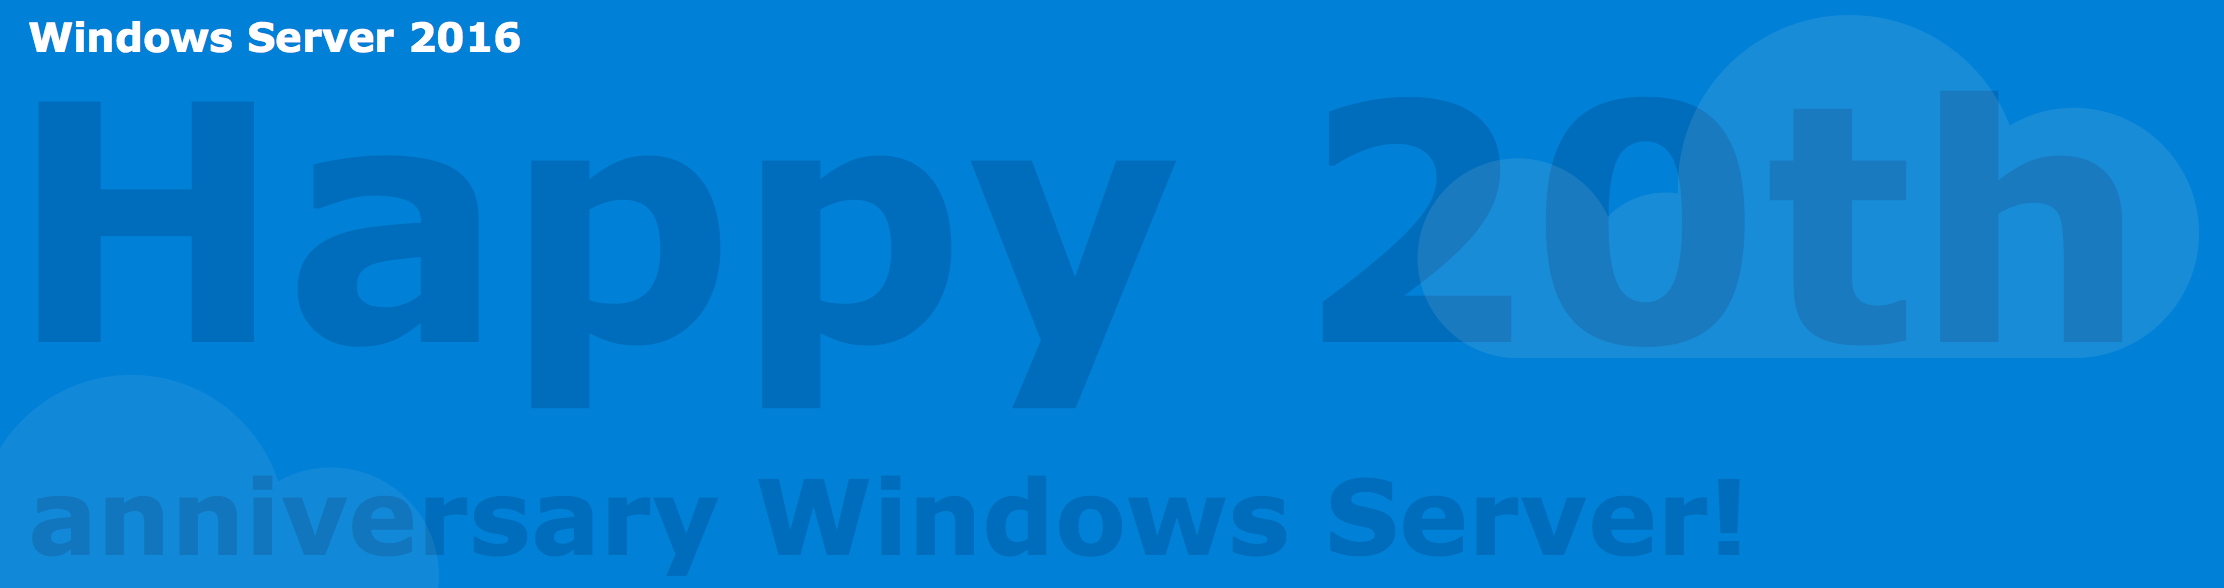 Bon anniversaire Windows Server